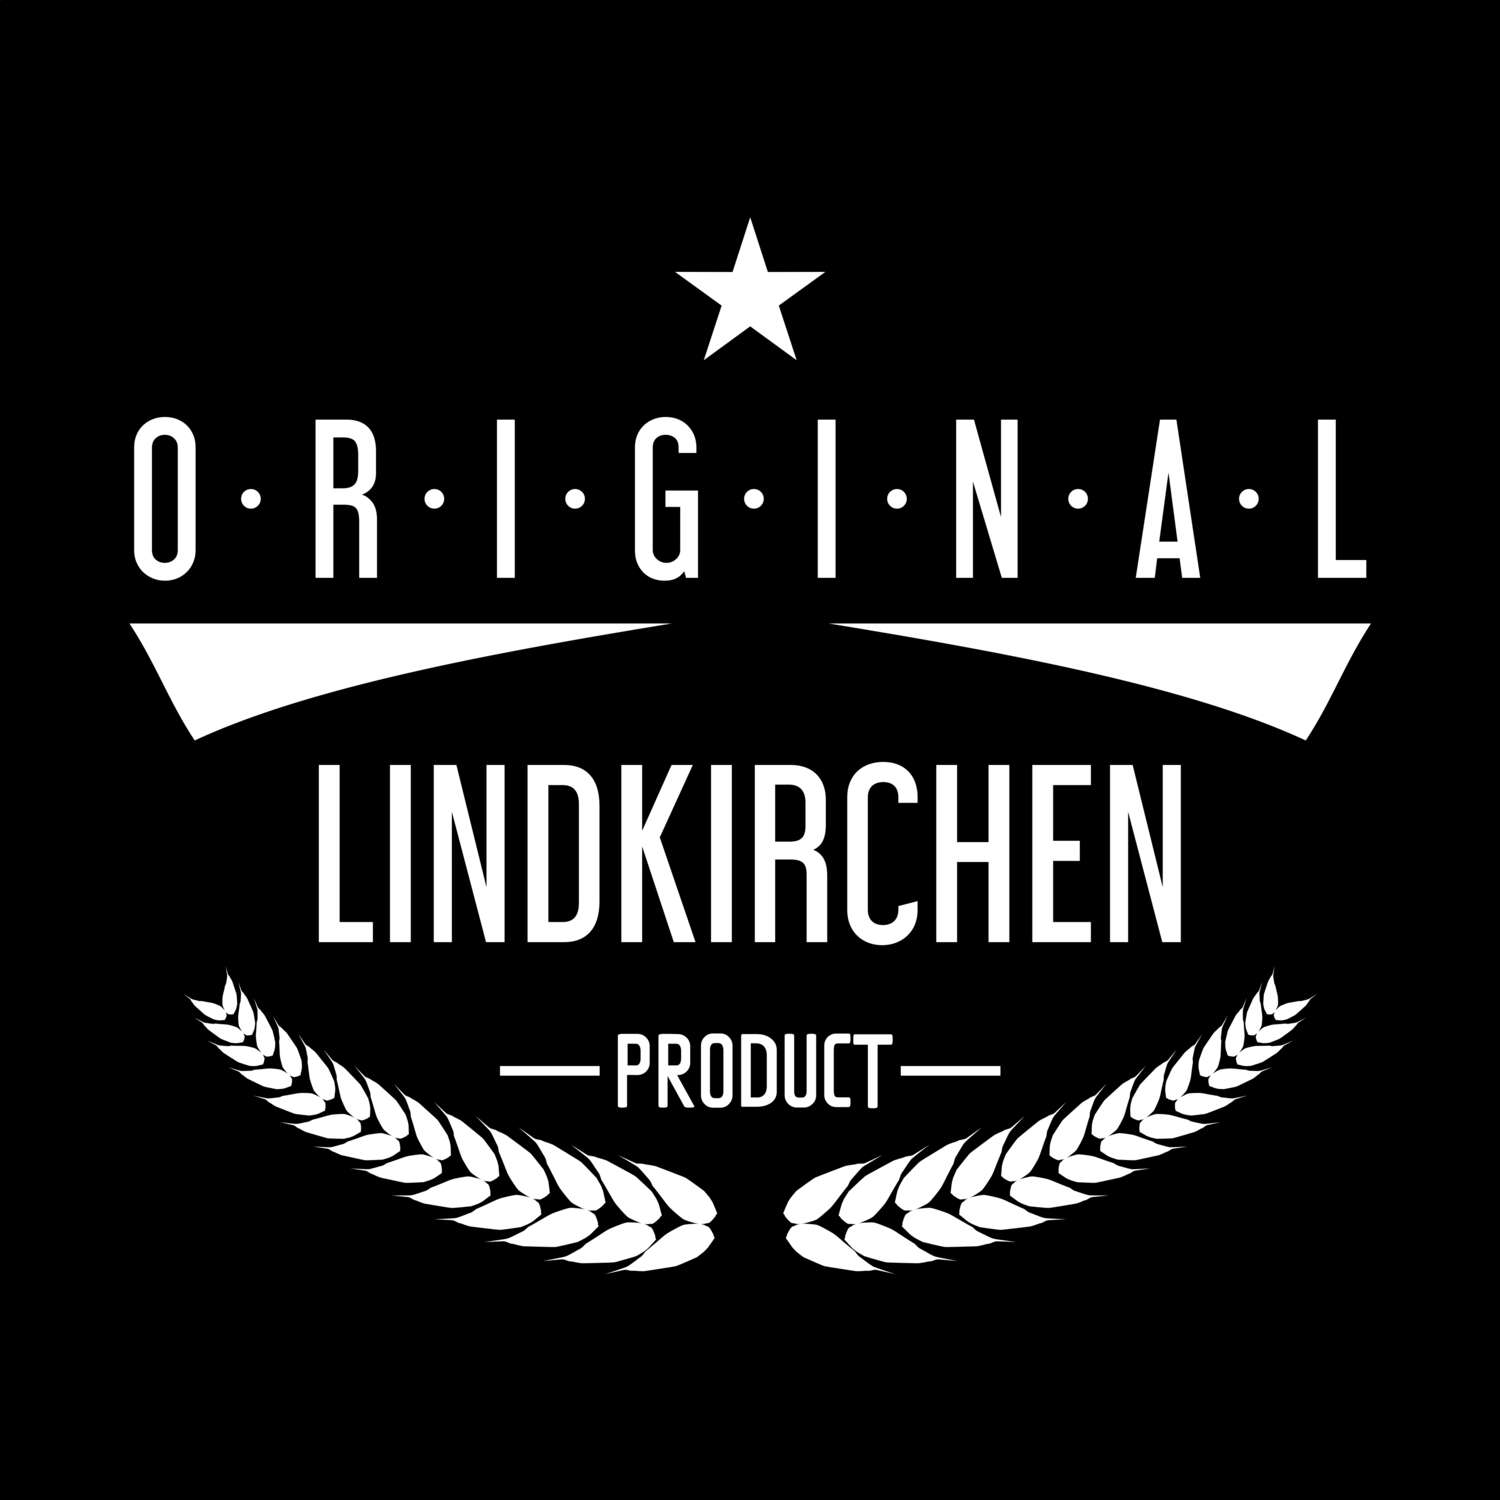 Lindkirchen T-Shirt »Original Product«